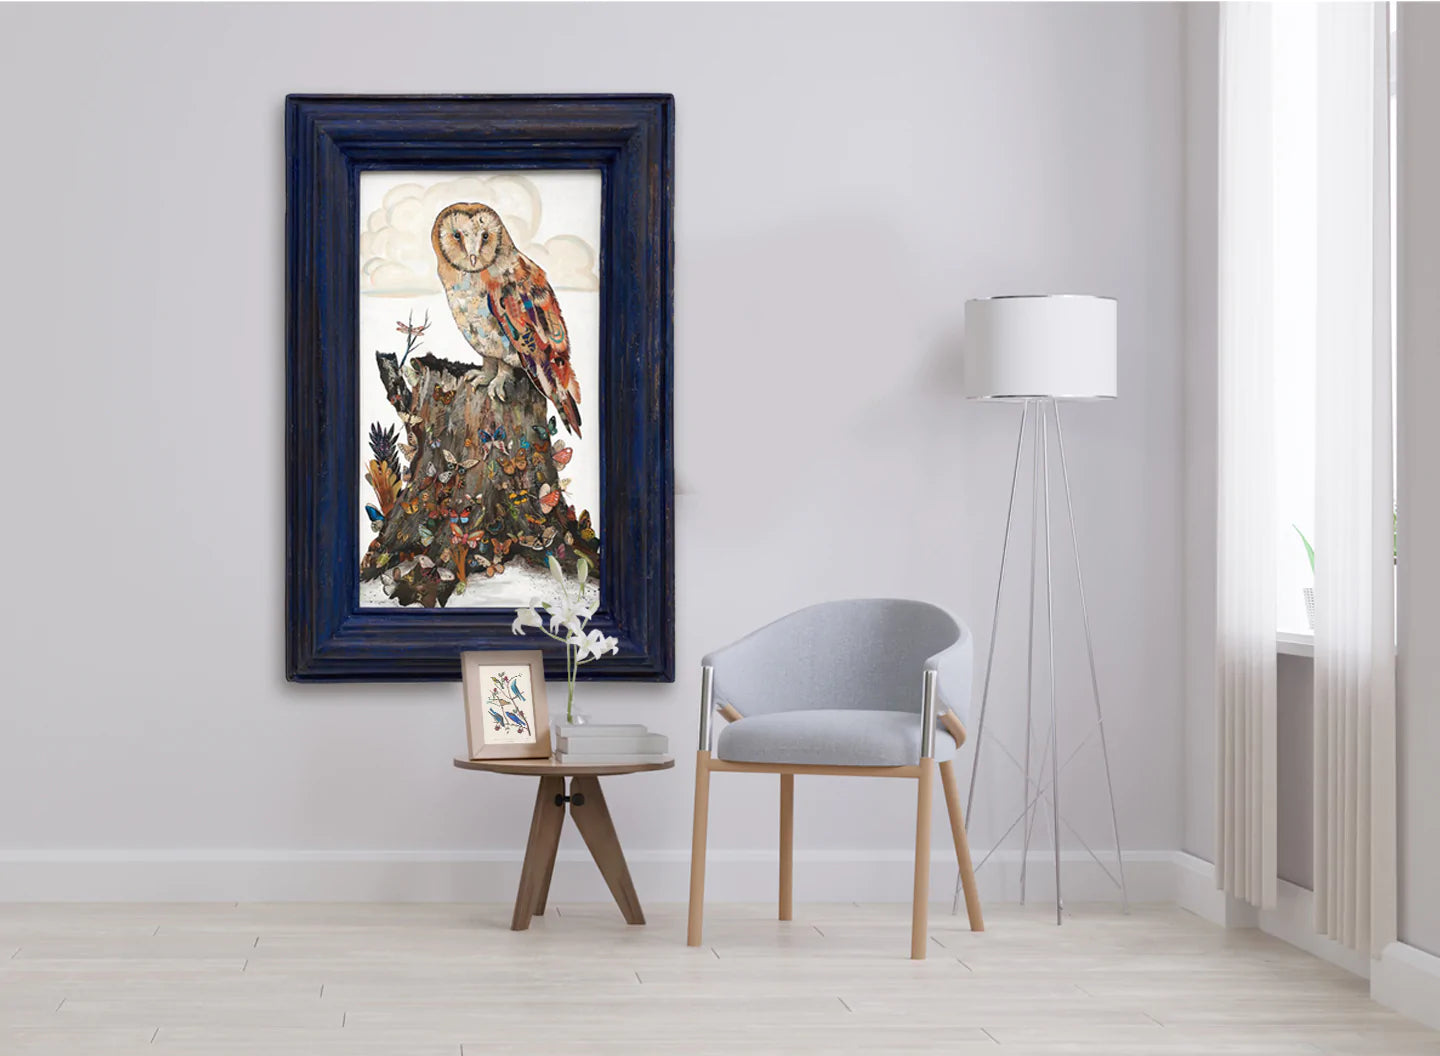 Barn owl paper collage in bright blue frame by artist Dolan Geiman